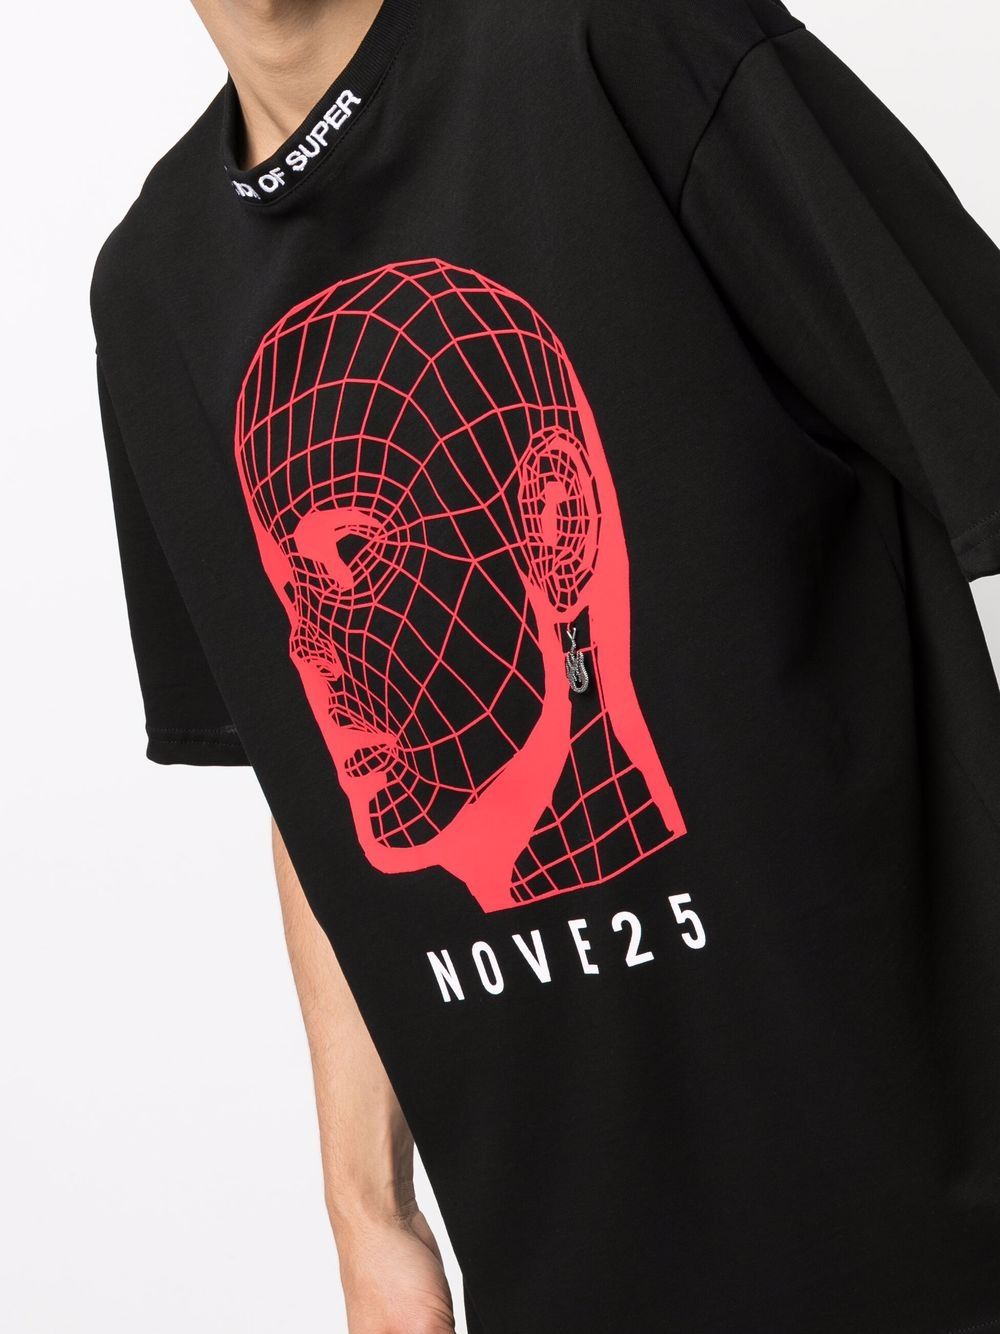 фото Vision of super футболка nove25 с графичным принтом